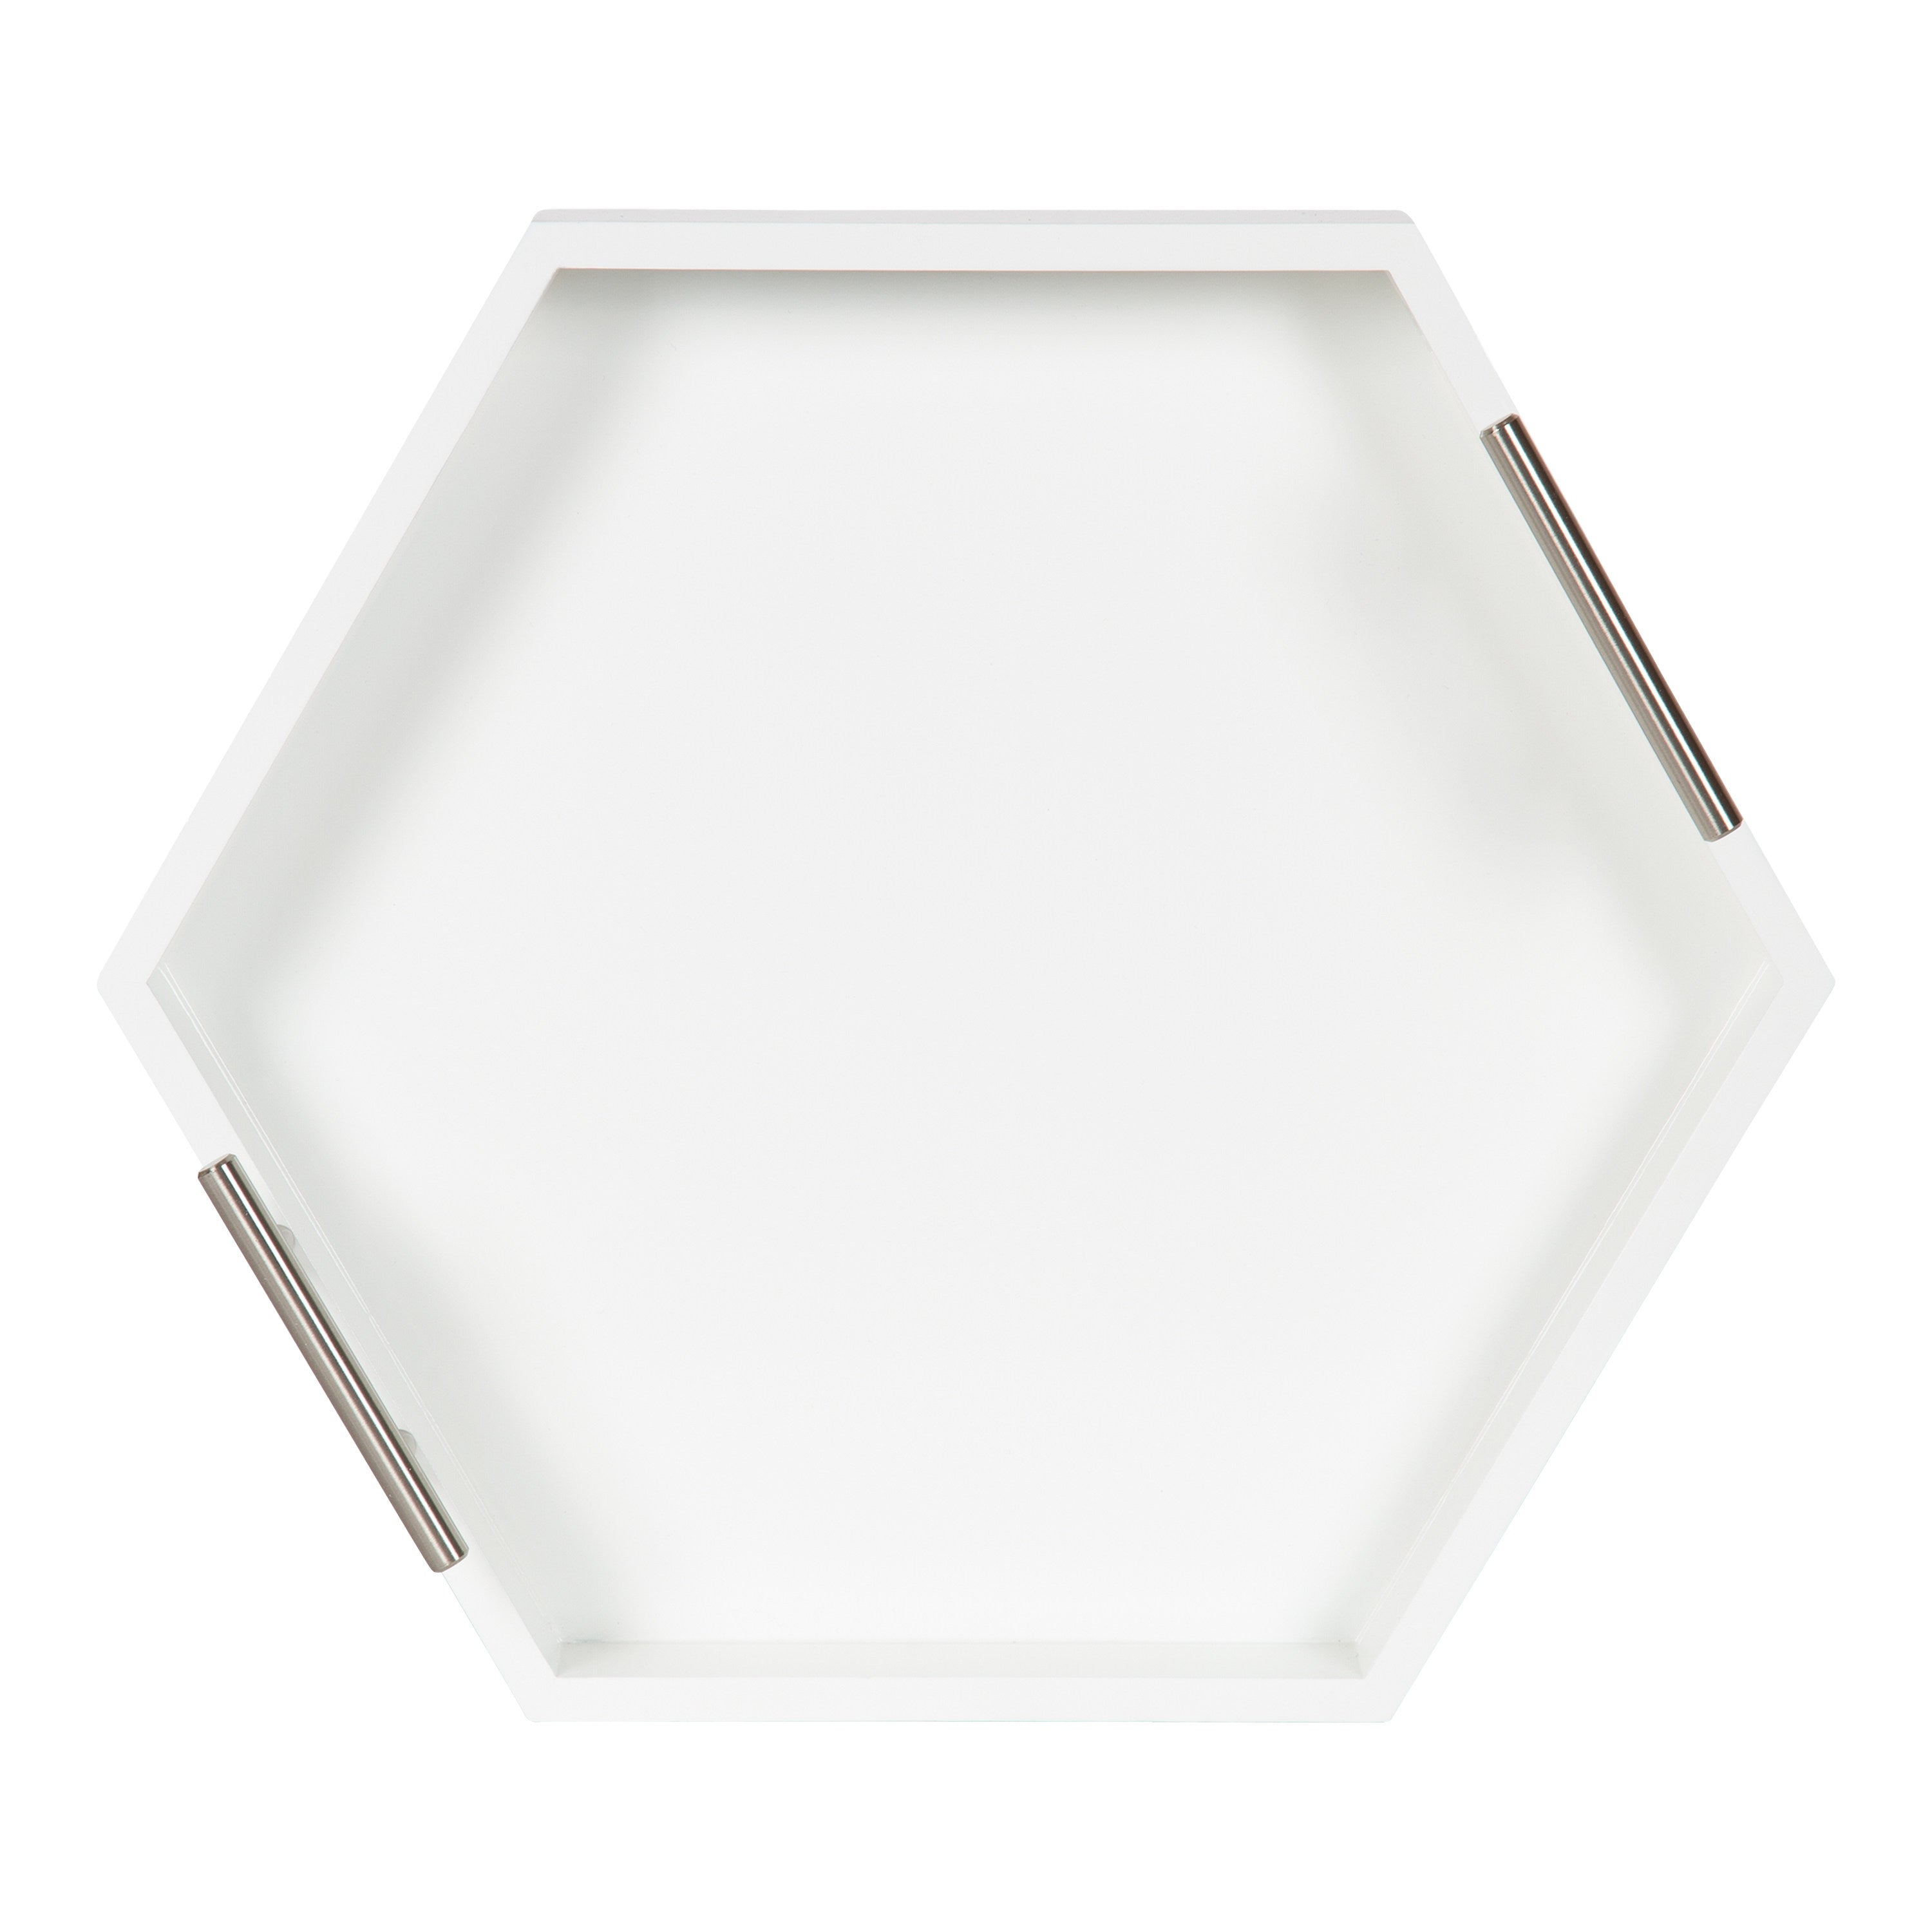 Lipton Hexagon Decorative Tray with Metal Handles